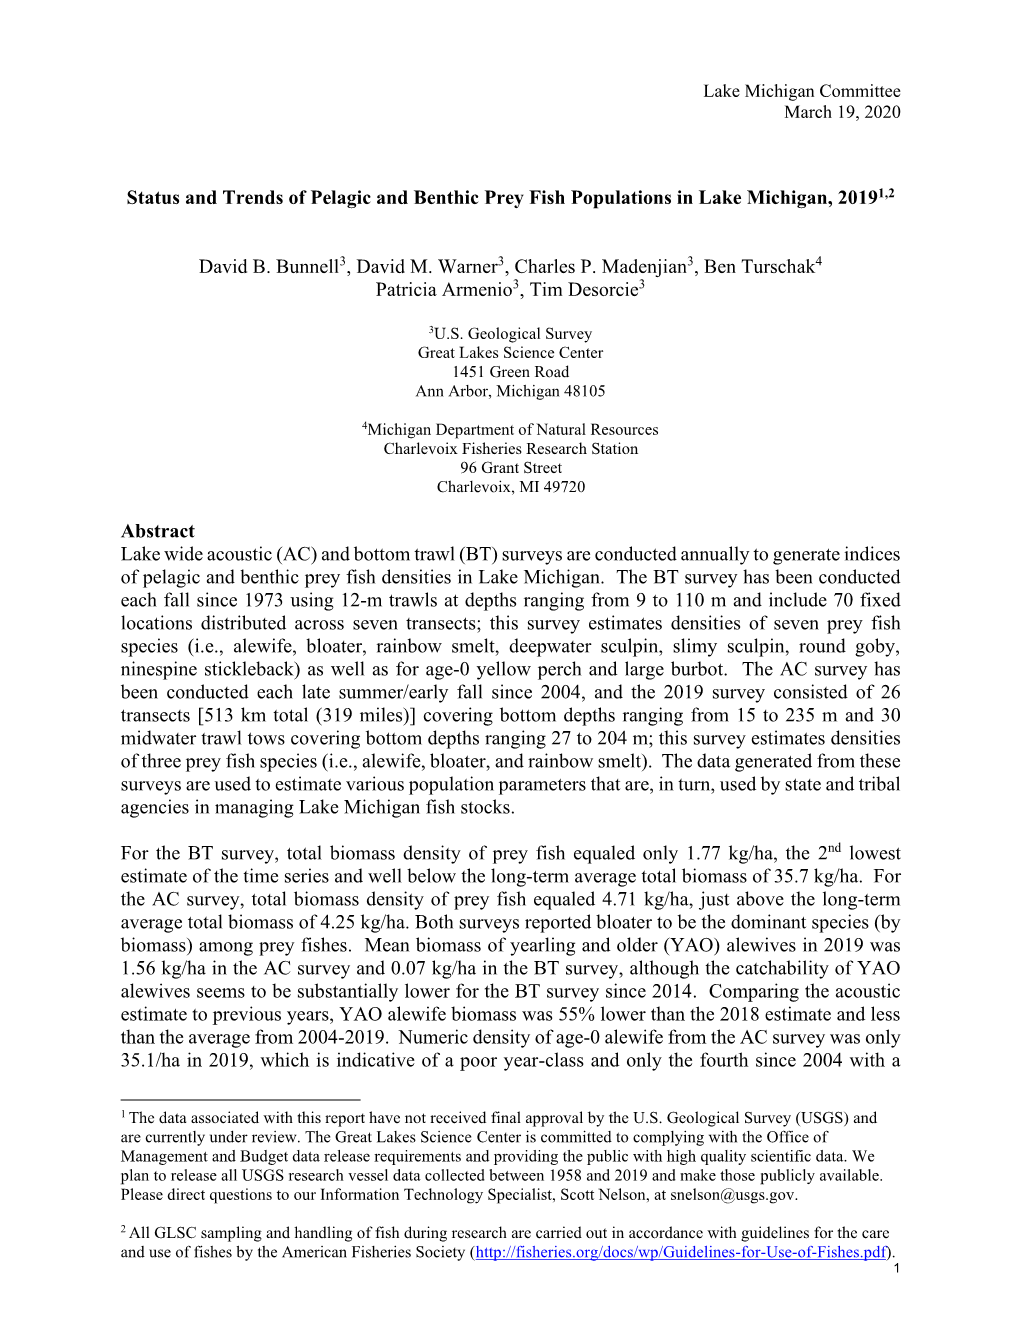 Status and Trends of Pelagic and Benthic Prey Fish Populations in Lake Michigan, 20191,2